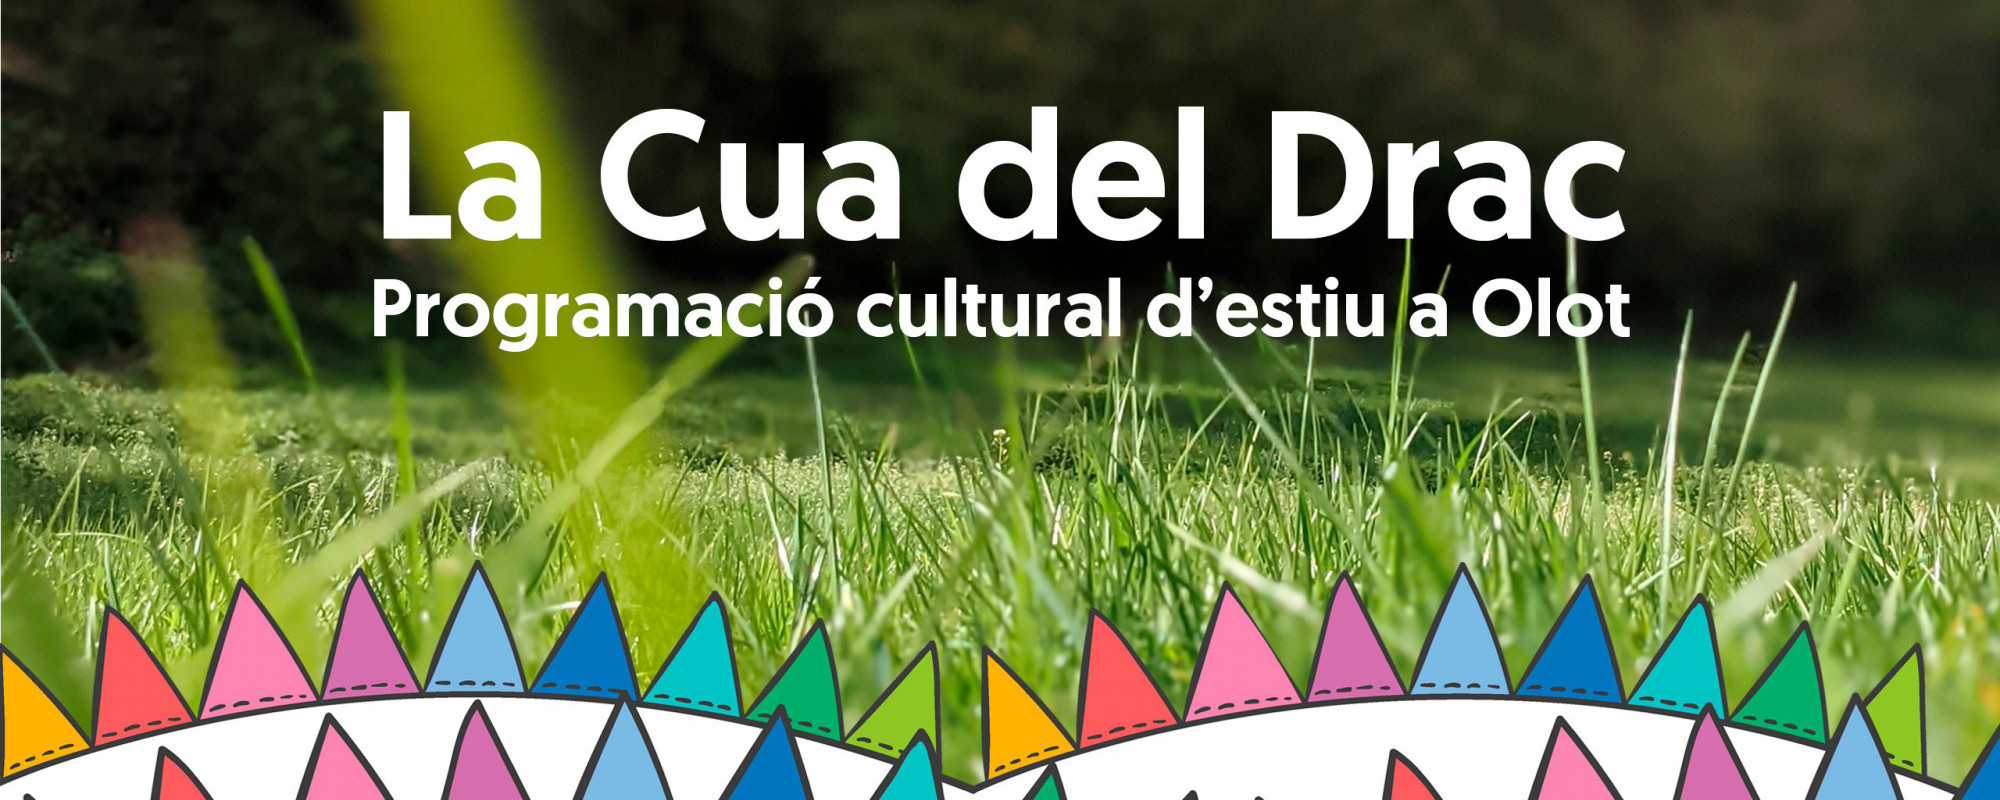 cua-del-drac-2560x1440